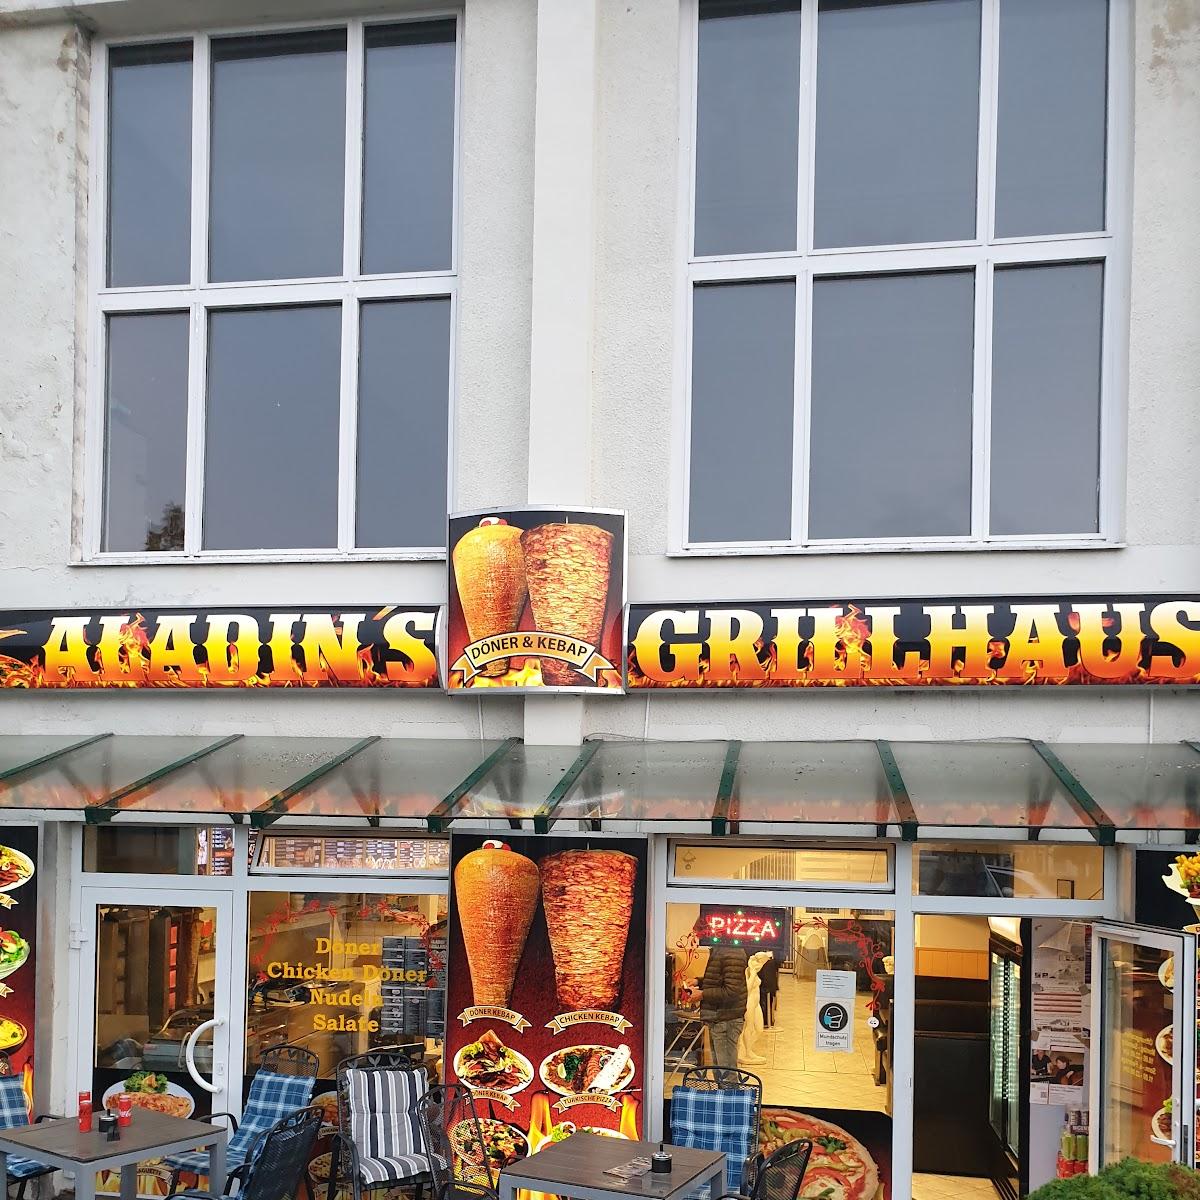 Restaurant "Aladins Grillhaus Döner & Pizza" in Pasewalk